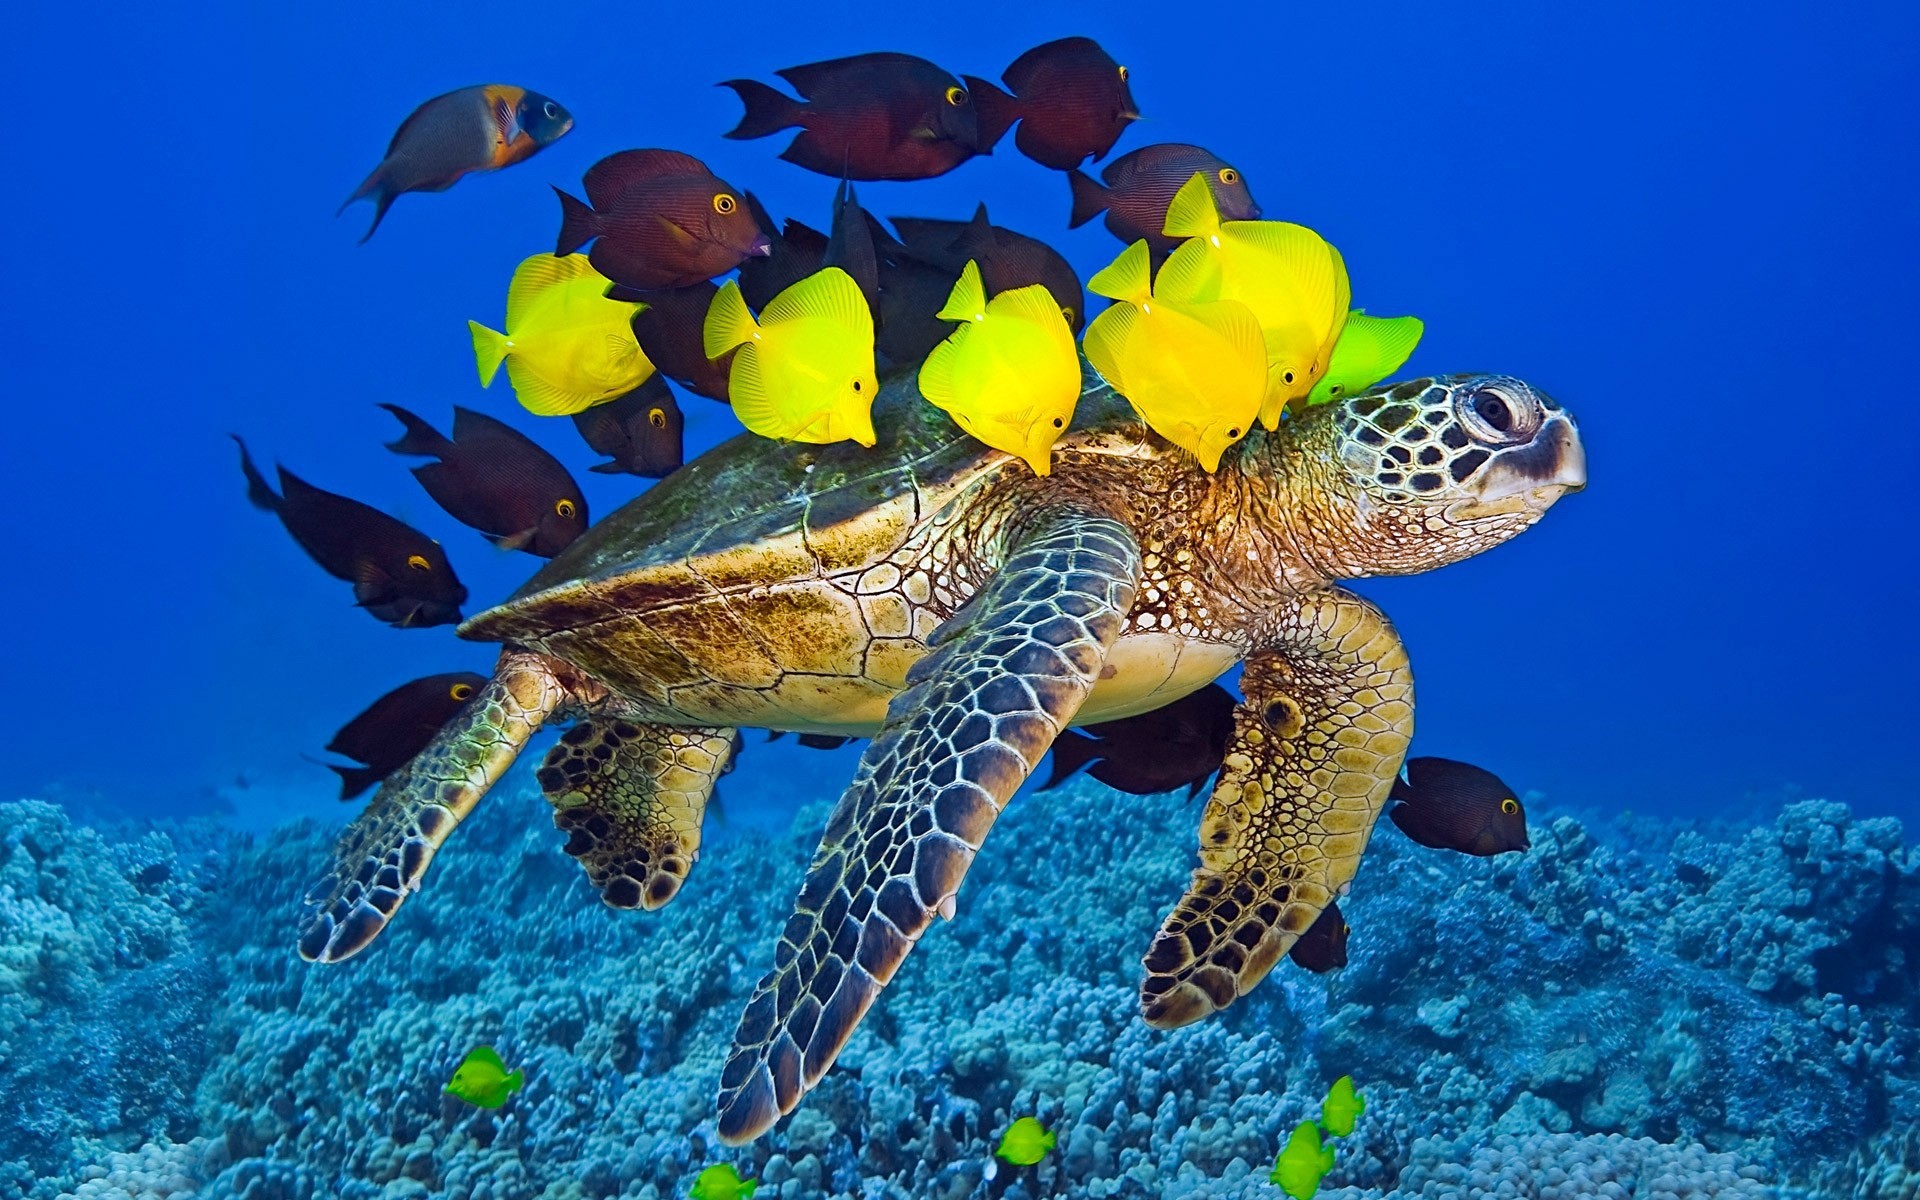 amphibians underwater coral fish reef turtle ocean sea tropical swimming marine snorkeling nature aquatic diving aquarium wildlife animal scuba water exotic fishes